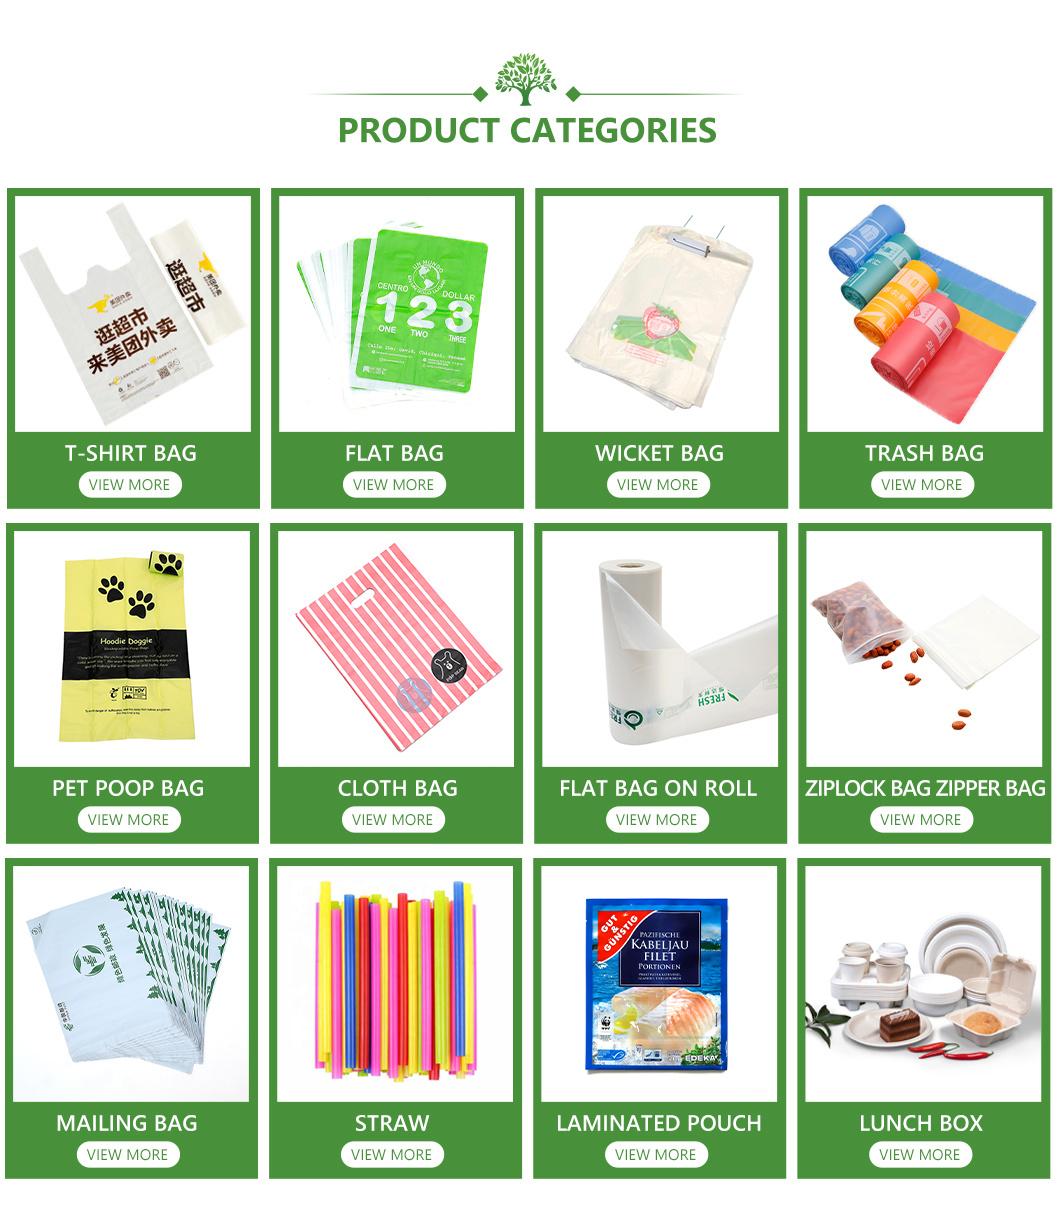 China PLA+Pbat/Pbat+Corn Starch Biodegradable Bags, Compostable Bags, Dog Pet Poop Bags, Waste Bags Wholesale